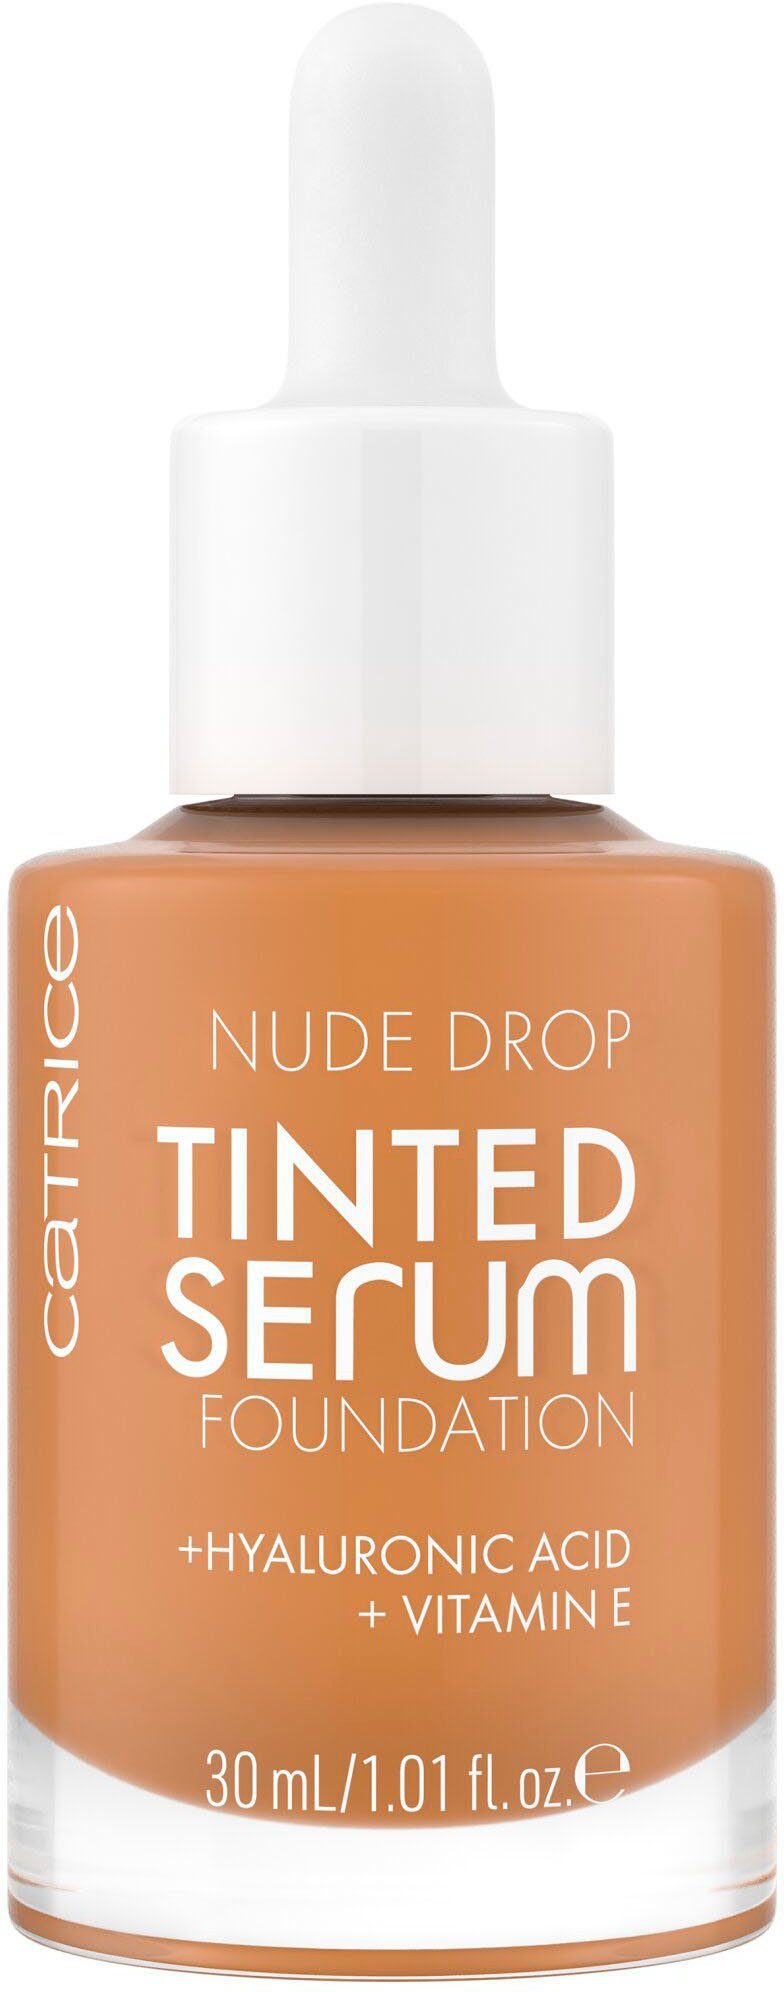 Catrice Foundation Nude Drop Tinted Serum Foundation 075C nude